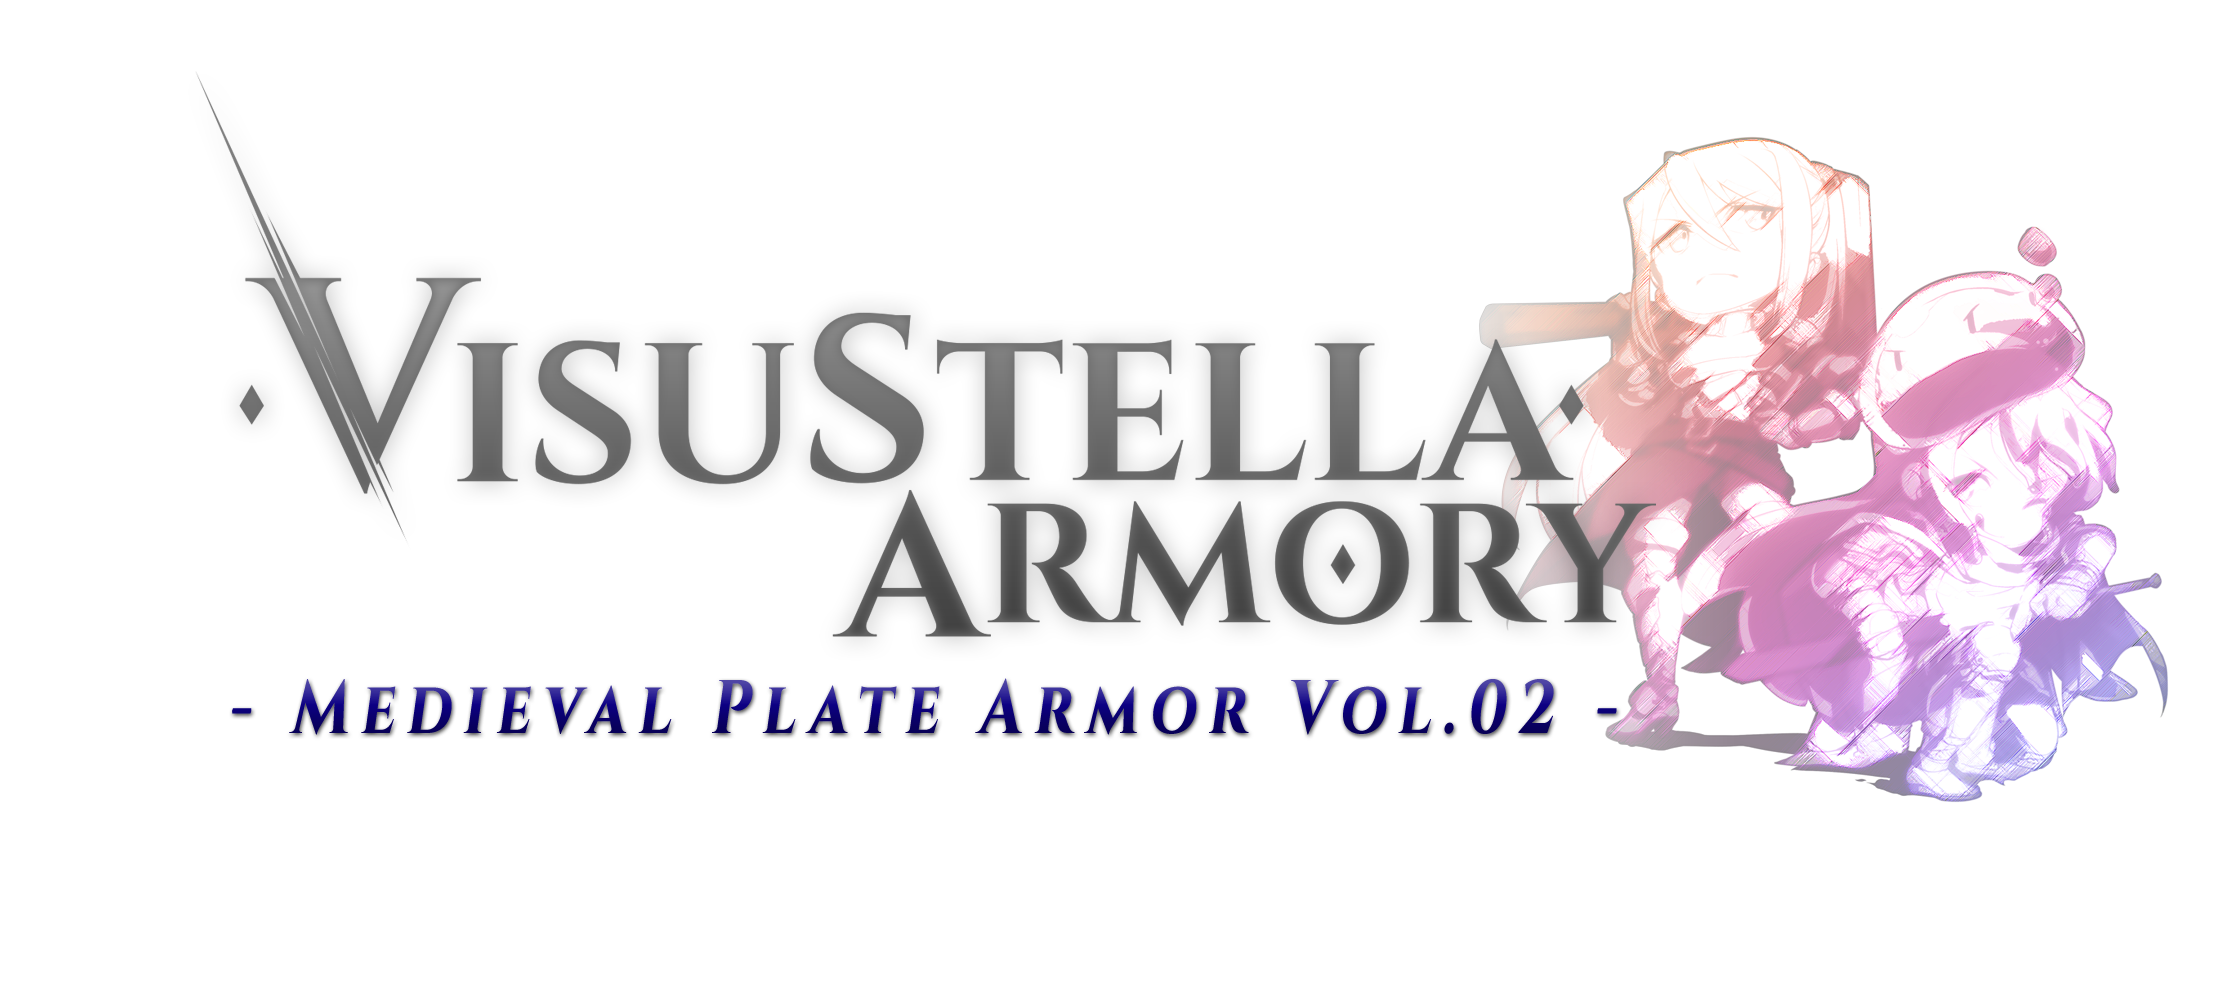 VisuStella Armory: Medieval Plate Armor Vol.02